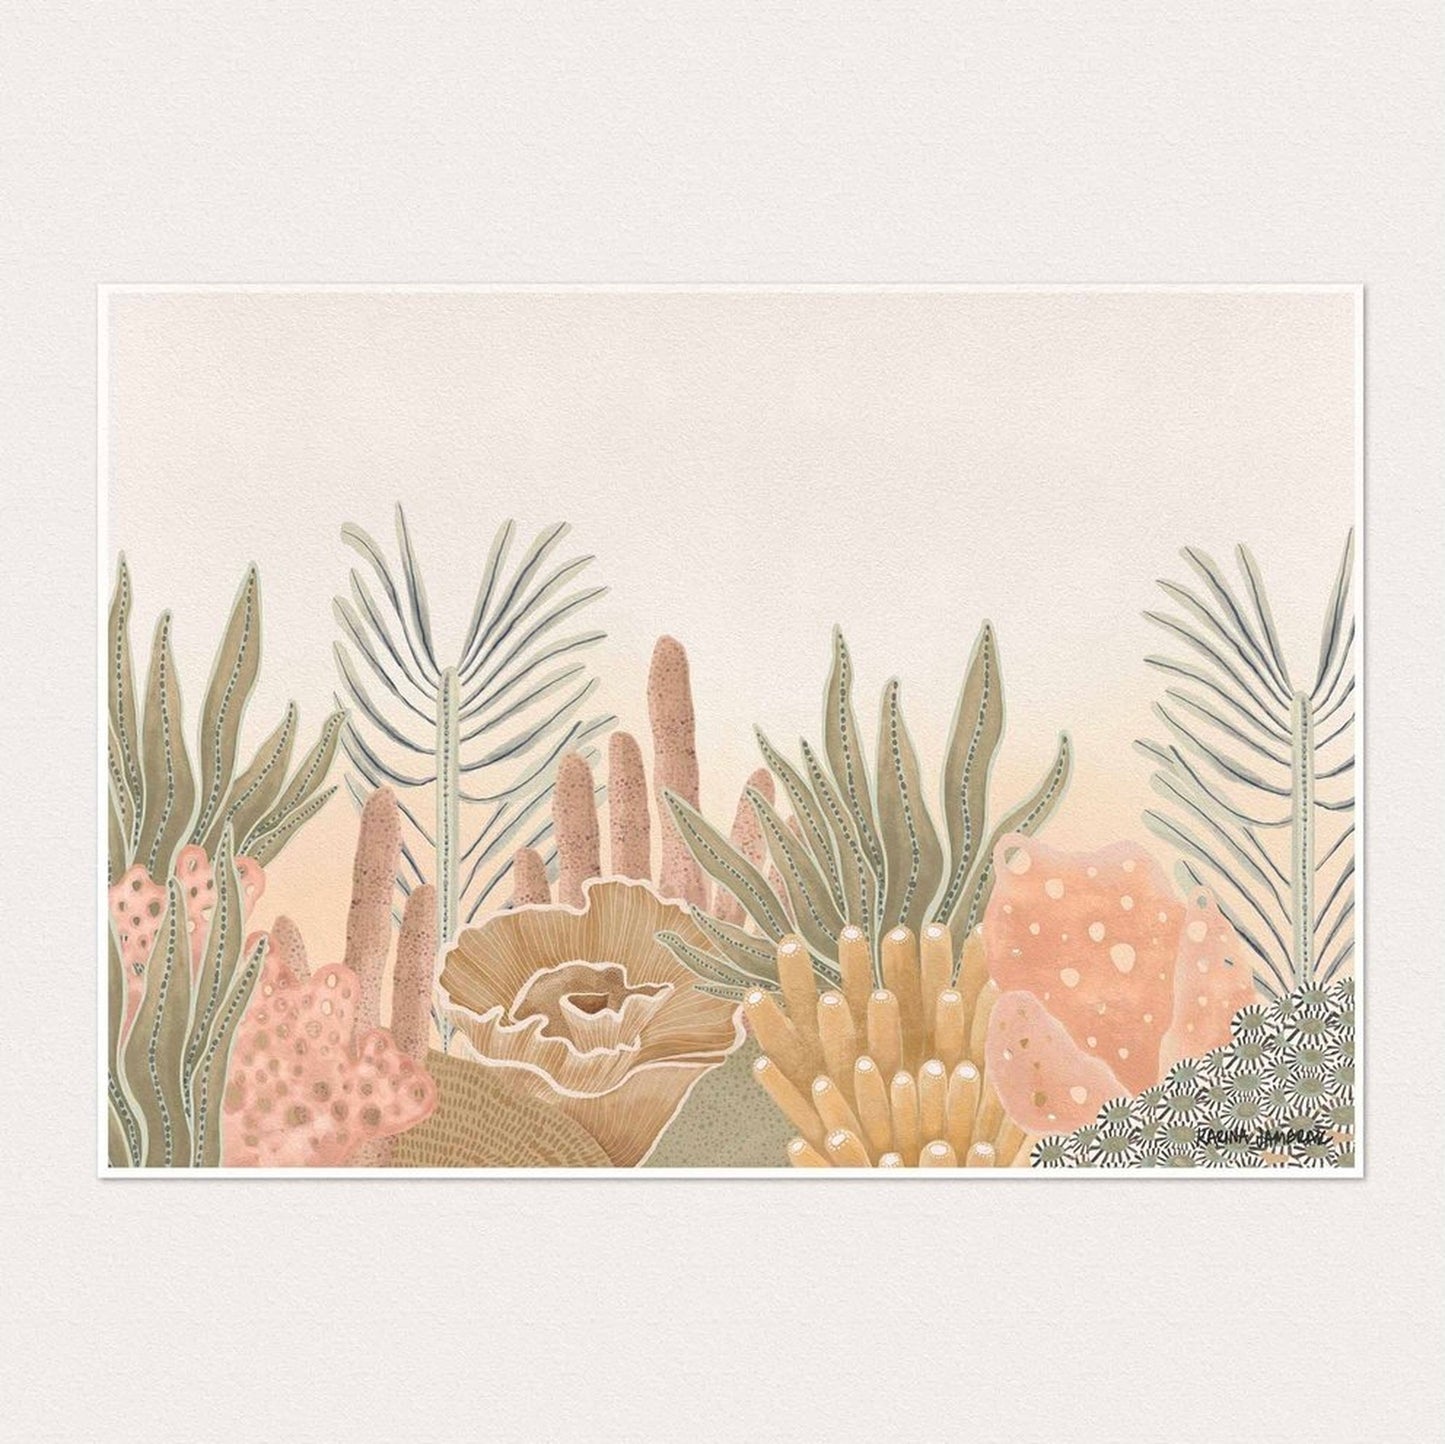 【karina jambrak】garden reef seascape ( landscape format)